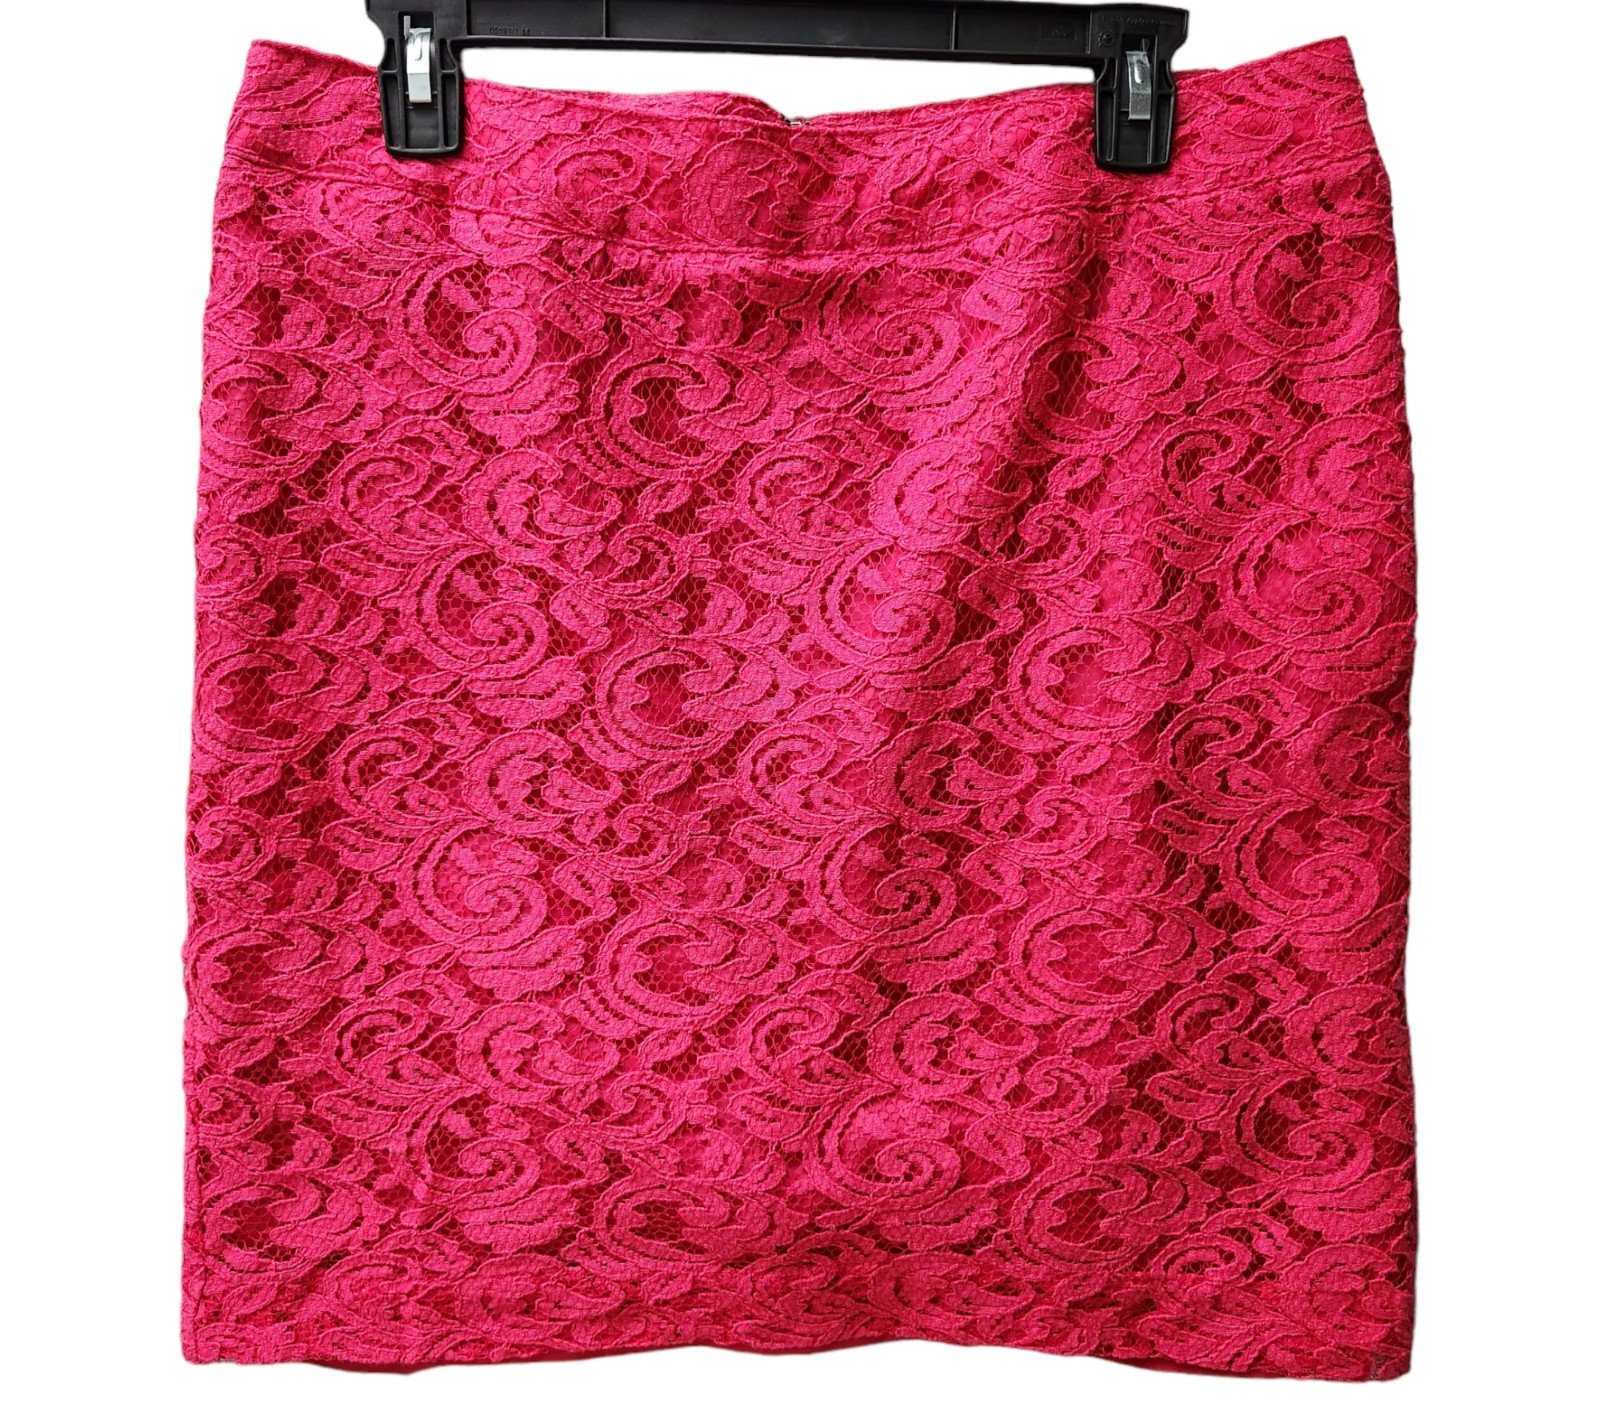 Discounted Merona Straight Skirt, Size 10, Pink Lace Pf